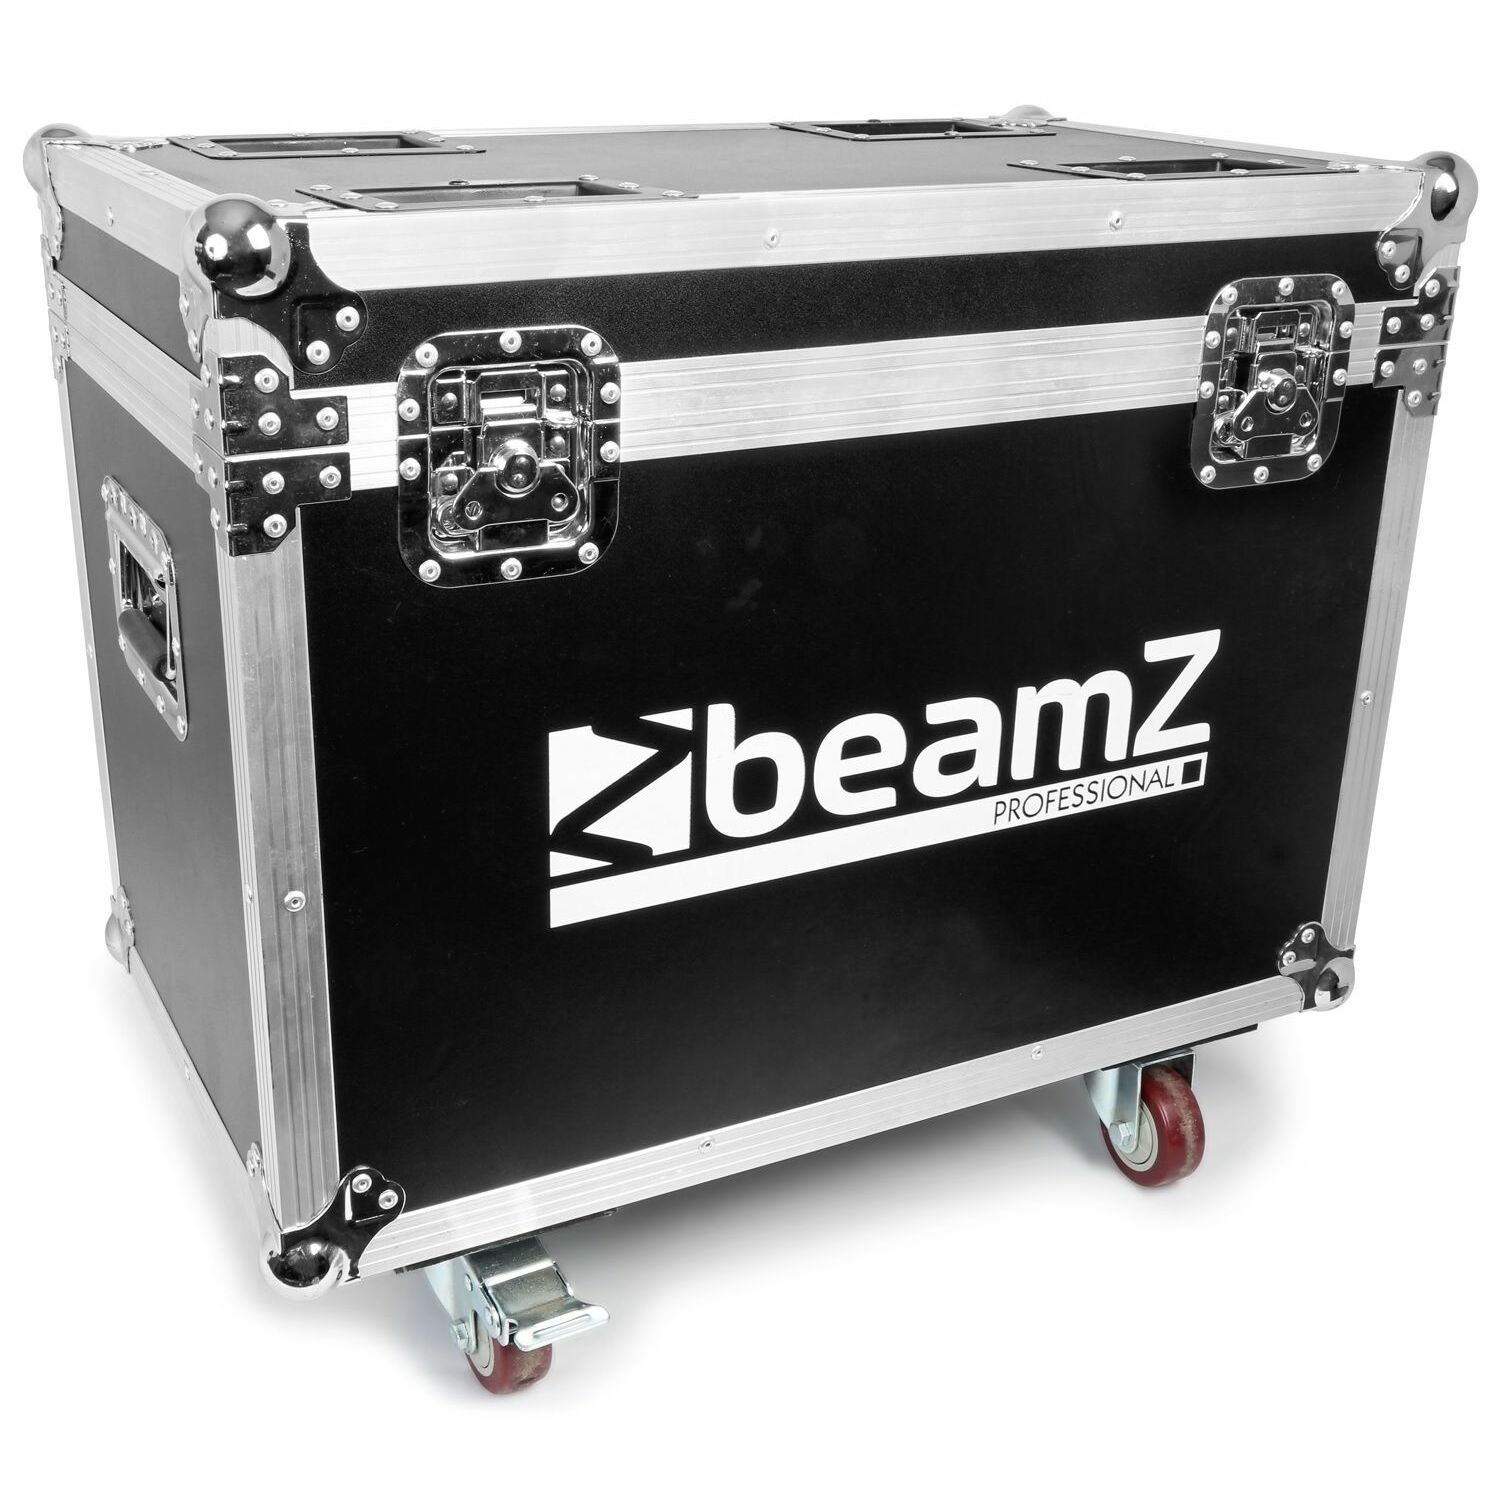 BeamZ Professional BeamZ FC1912 flightcase voor 2x MHL1912 moving heads